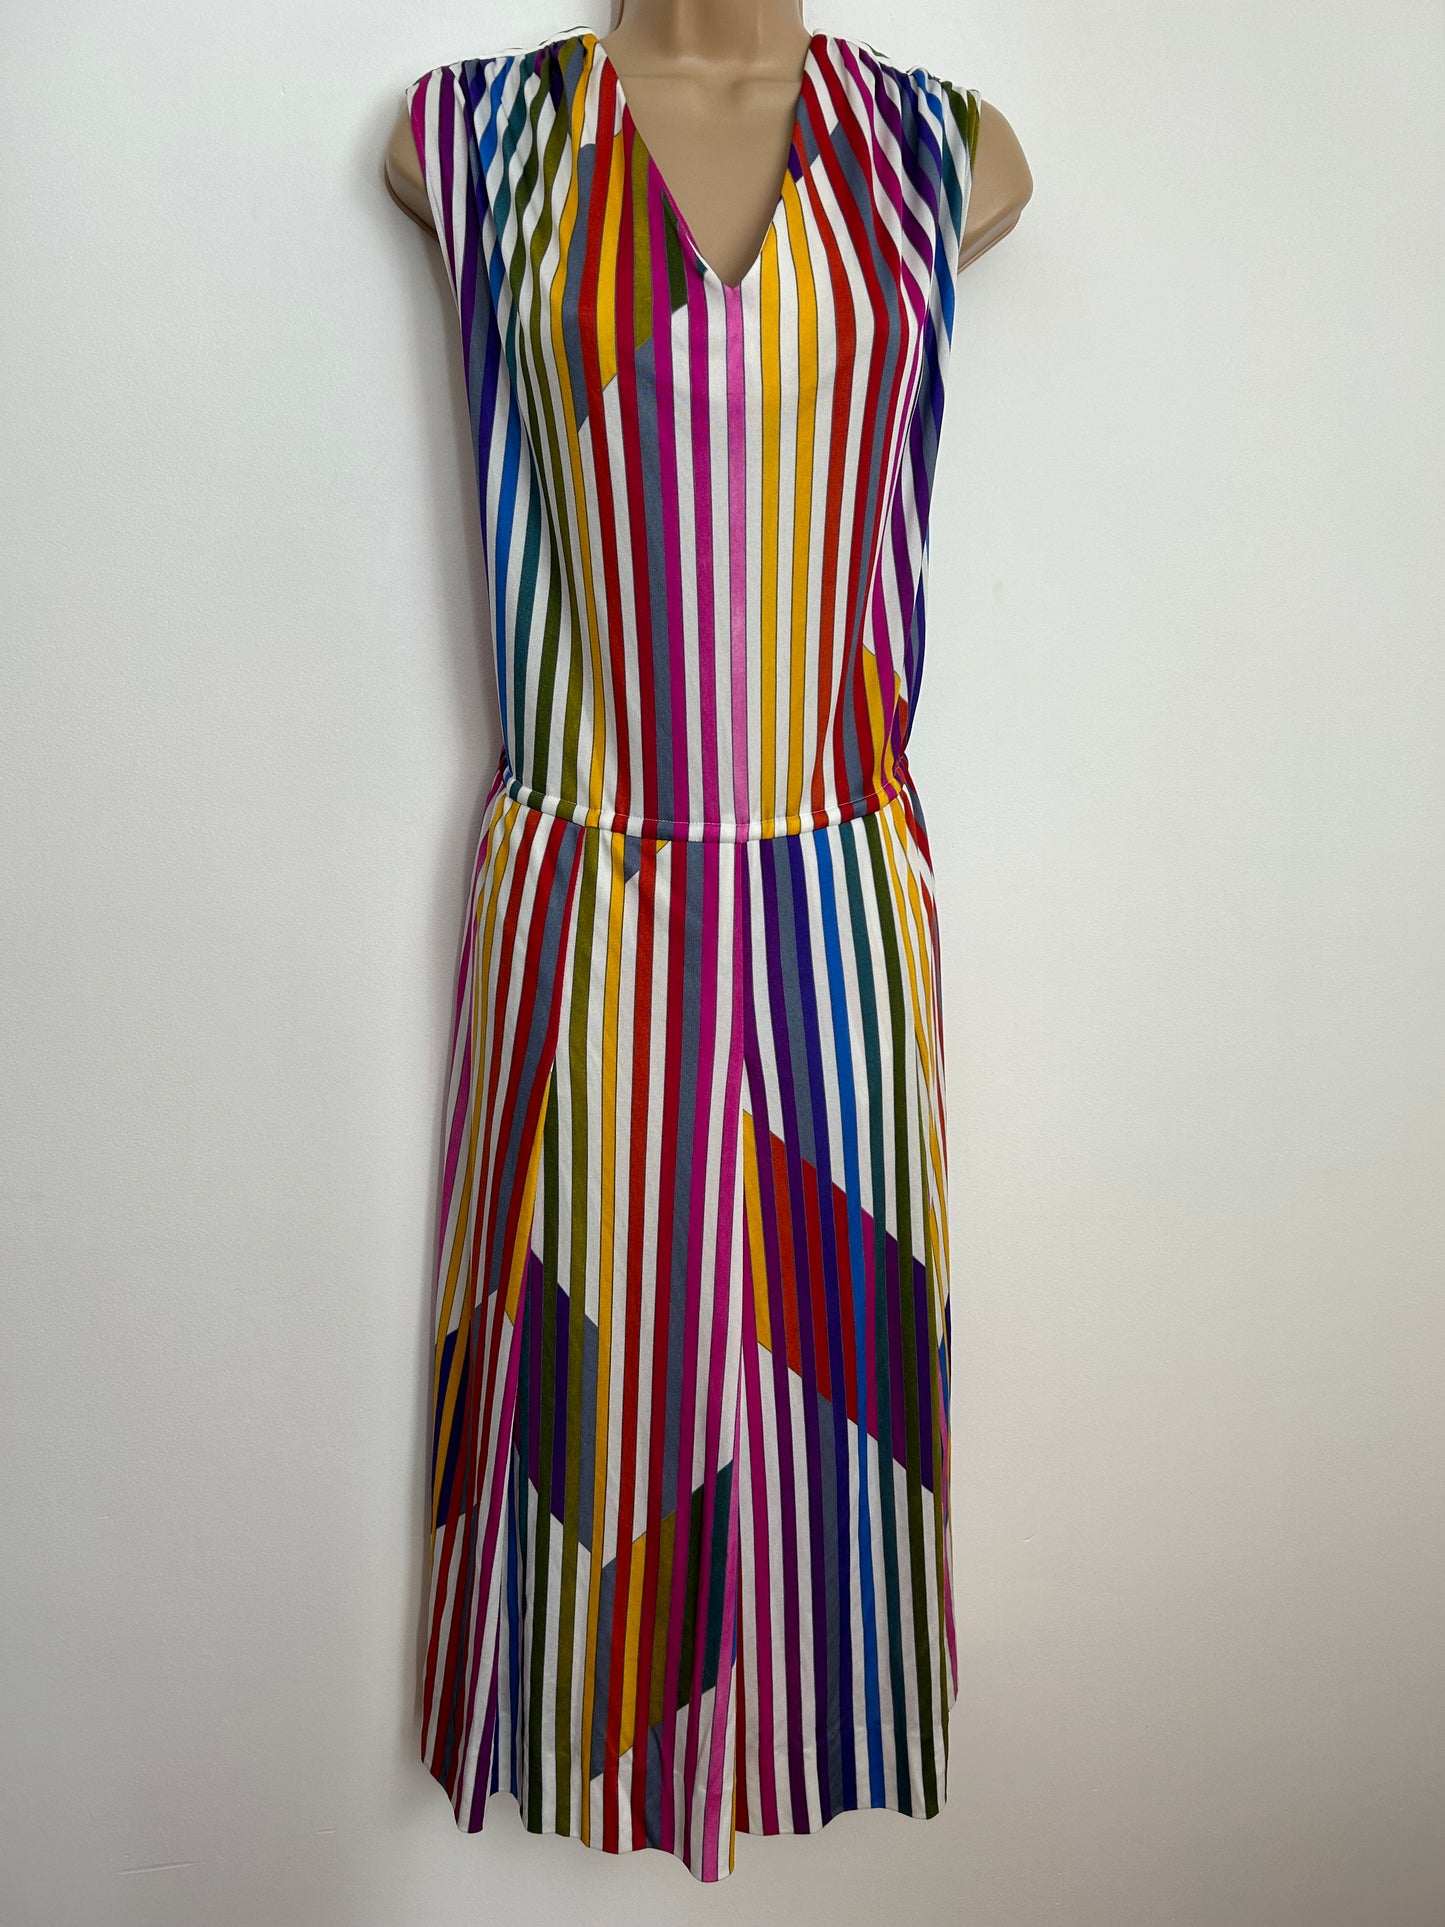 Vintage 1980s UK Size 16 Cute Rainbow Stripe Print Sleeveless Pleated Day Dress By Sommerfeldt